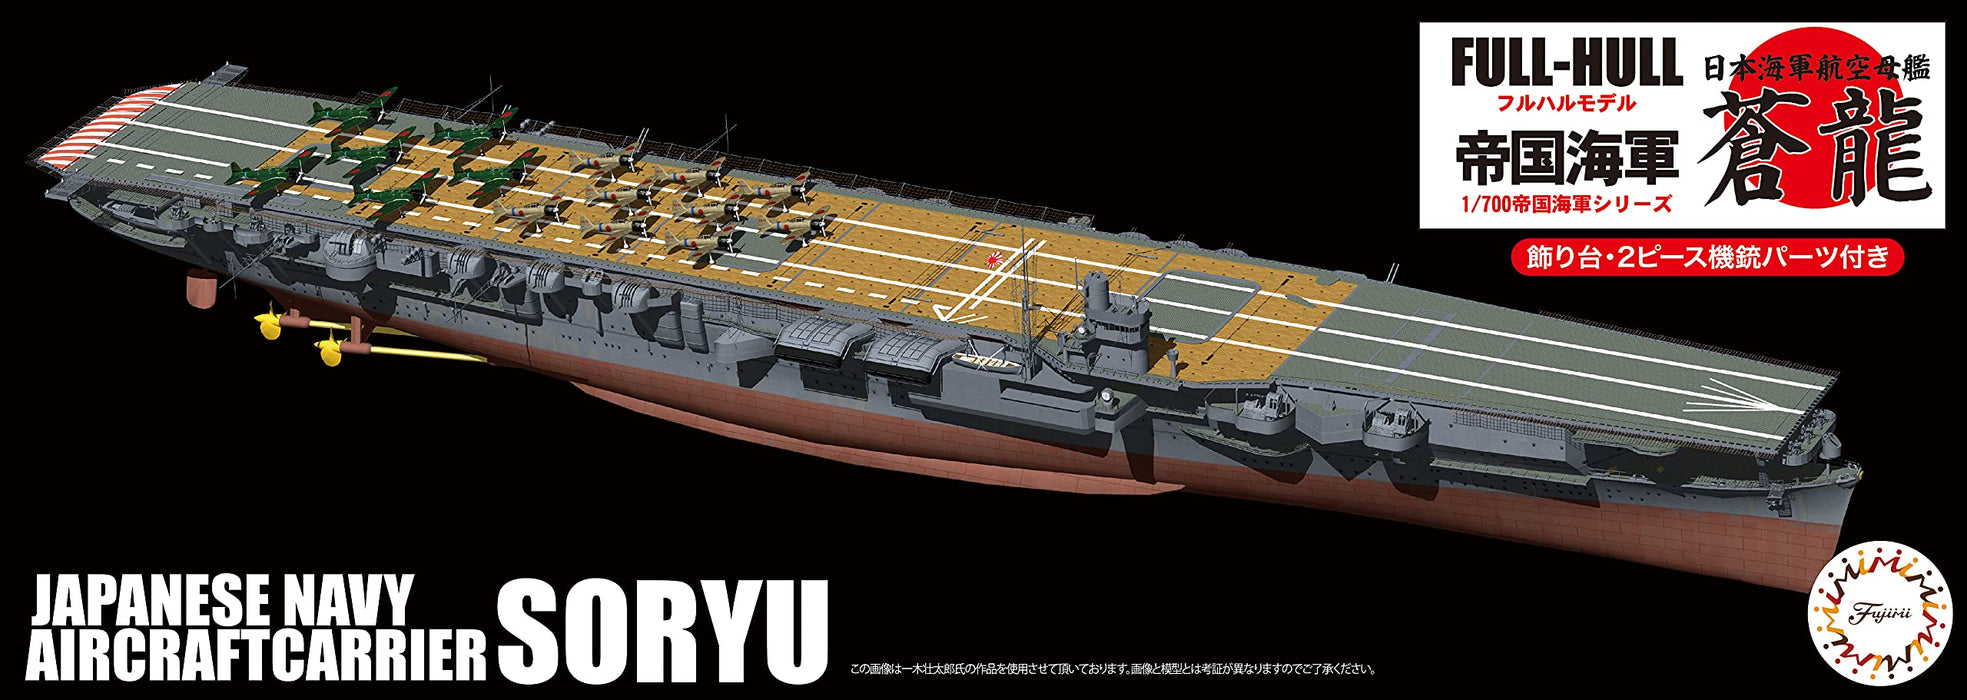 Fujimi Model 1/700 Imperial Navy Series No.24 Japanese Navy Aircraft Carrier Soryu Full Hull Model Fh-24